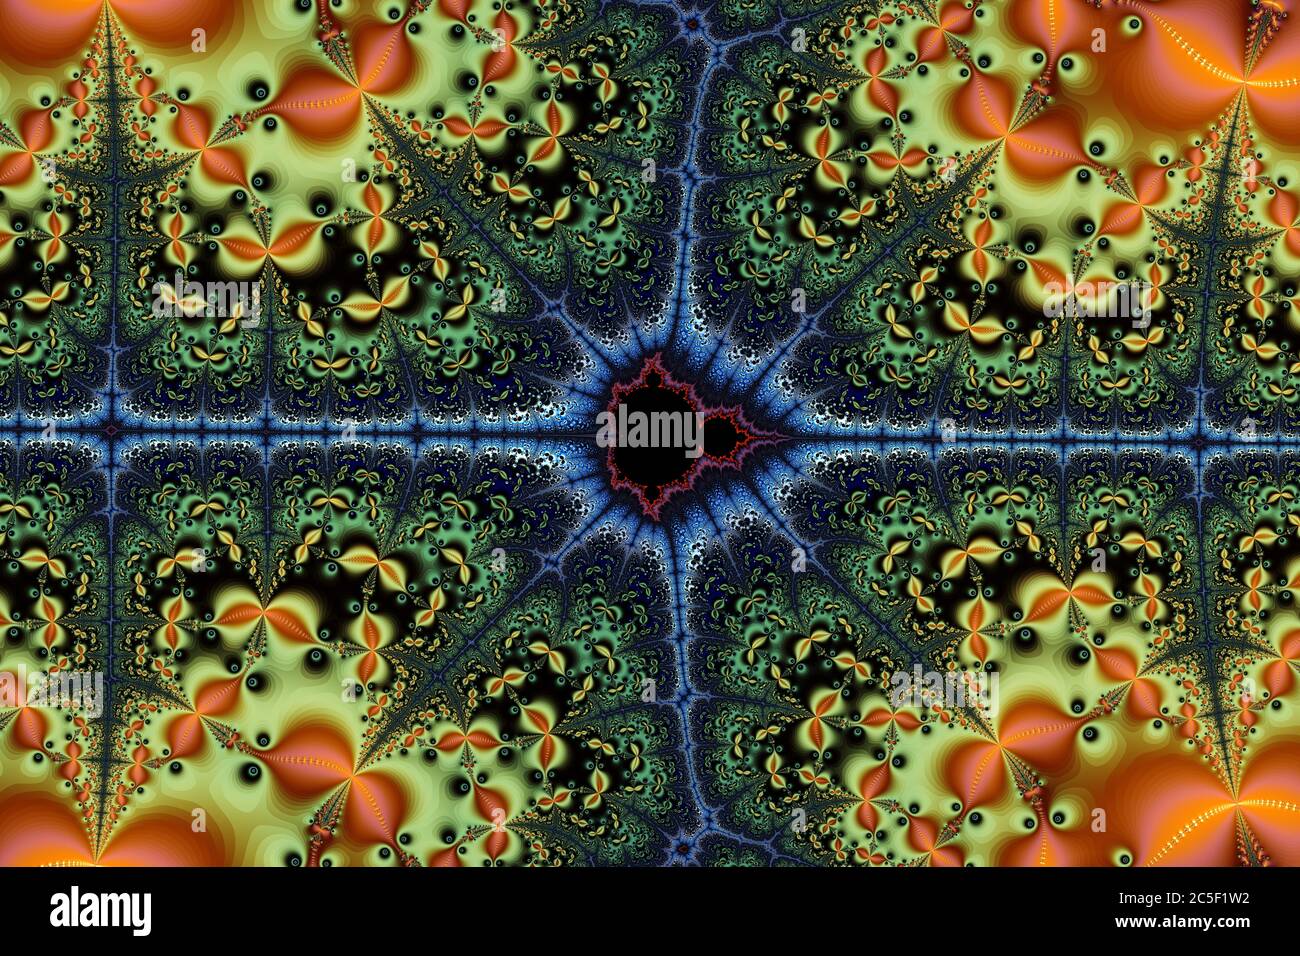 Flowery mandelbrot set fractal hi-res stock photography and images - Alamy